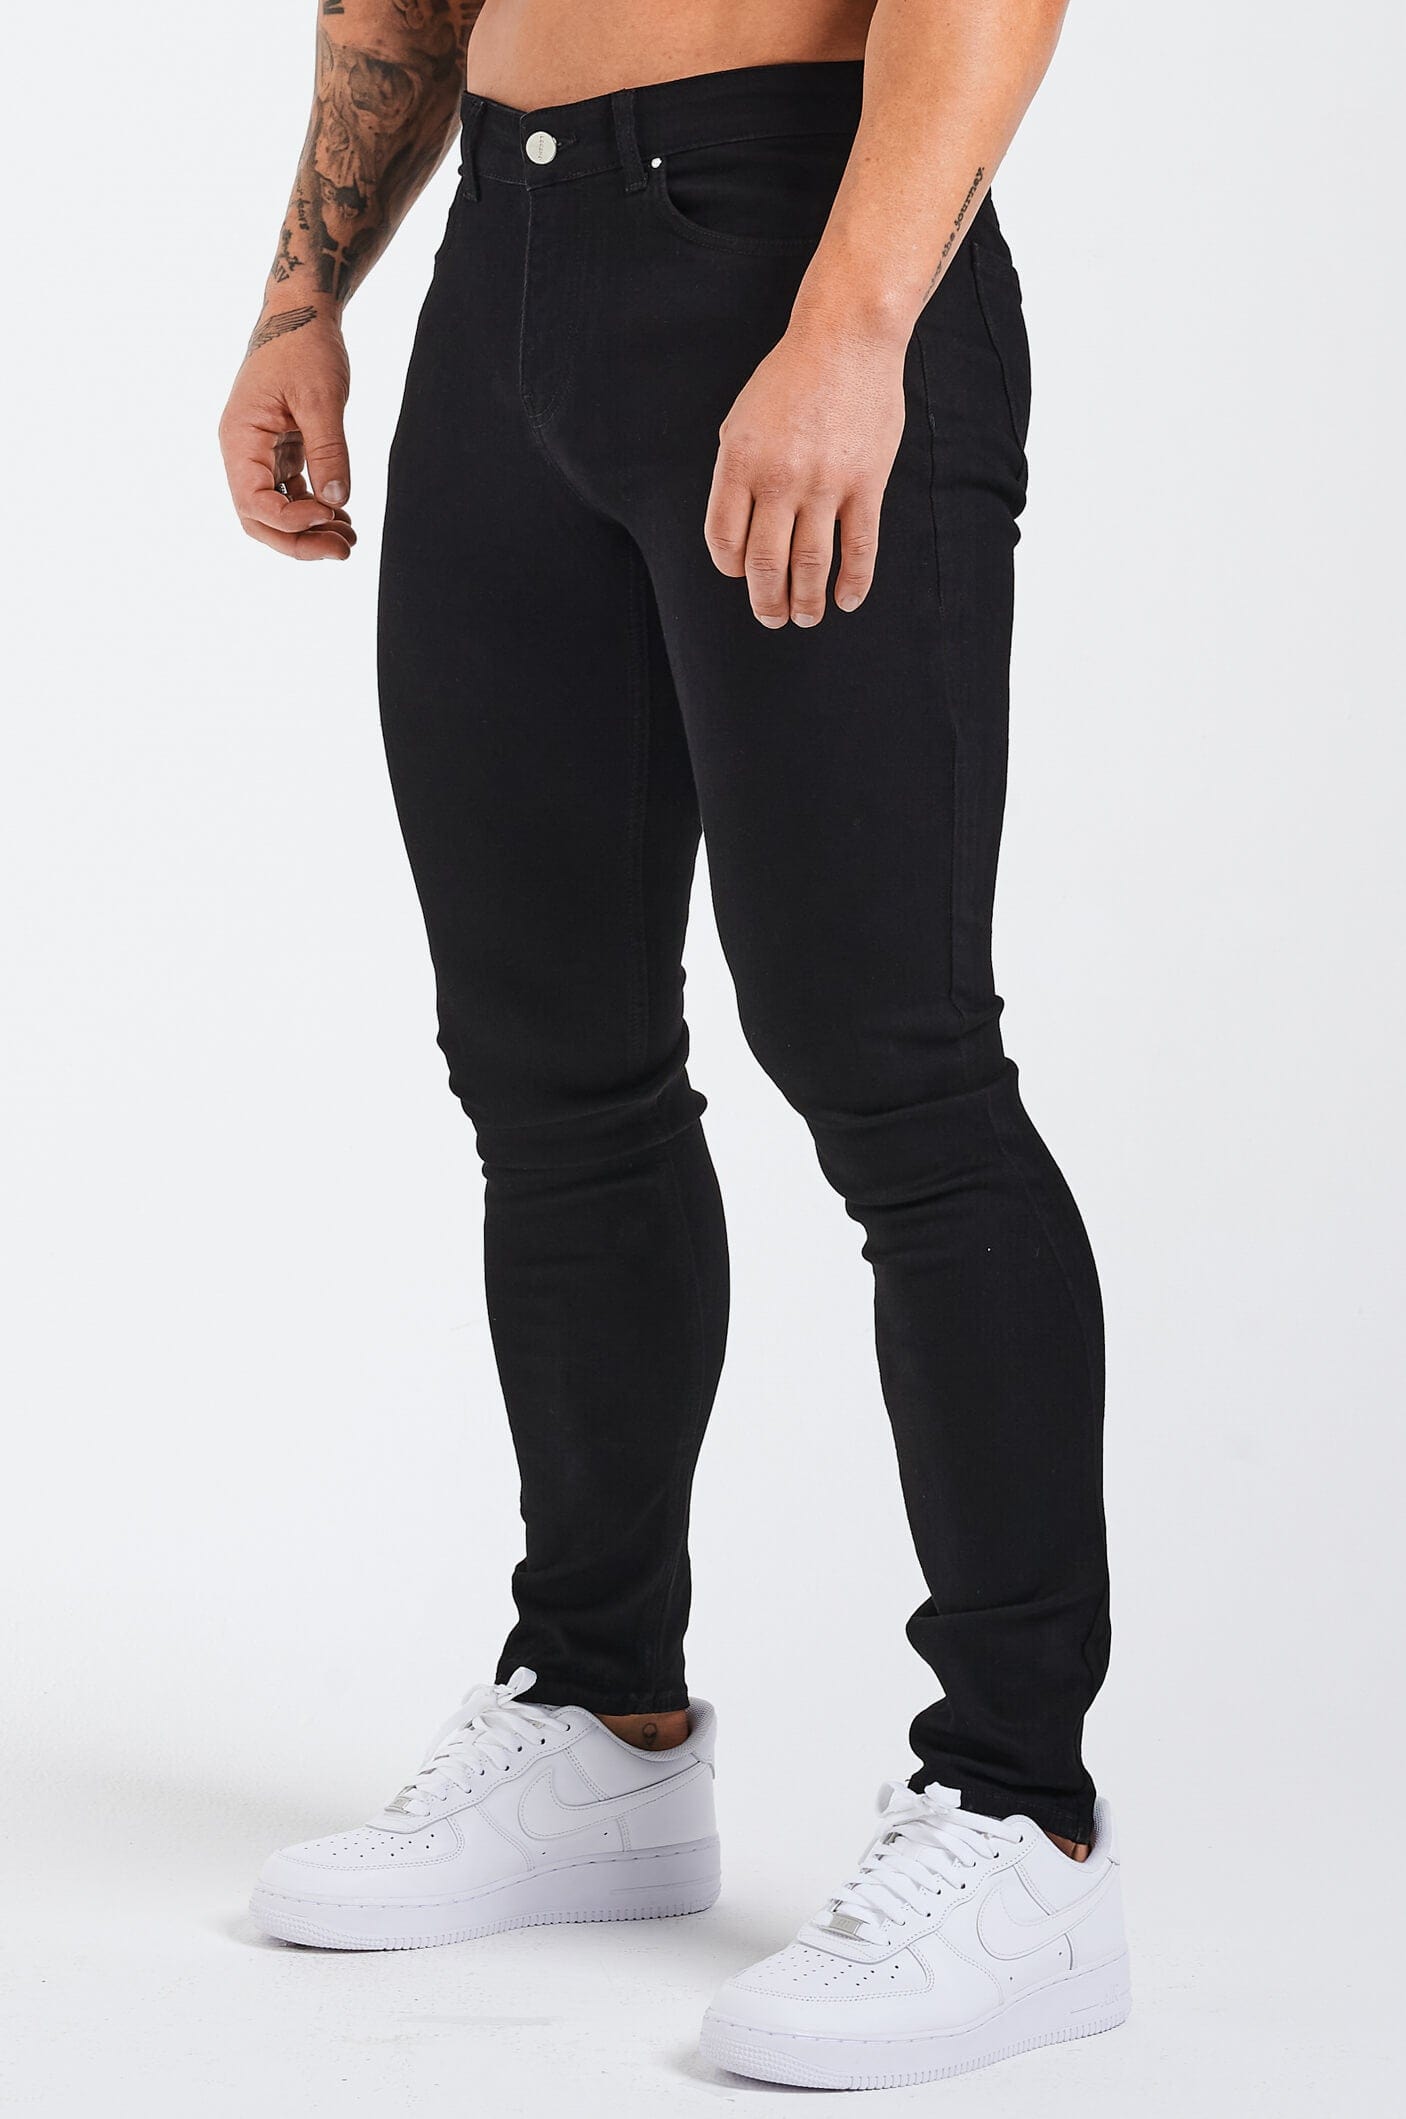 Legend London Jeans - slim 2.0 SLIM FIT JEANS 2.0 - BLACK